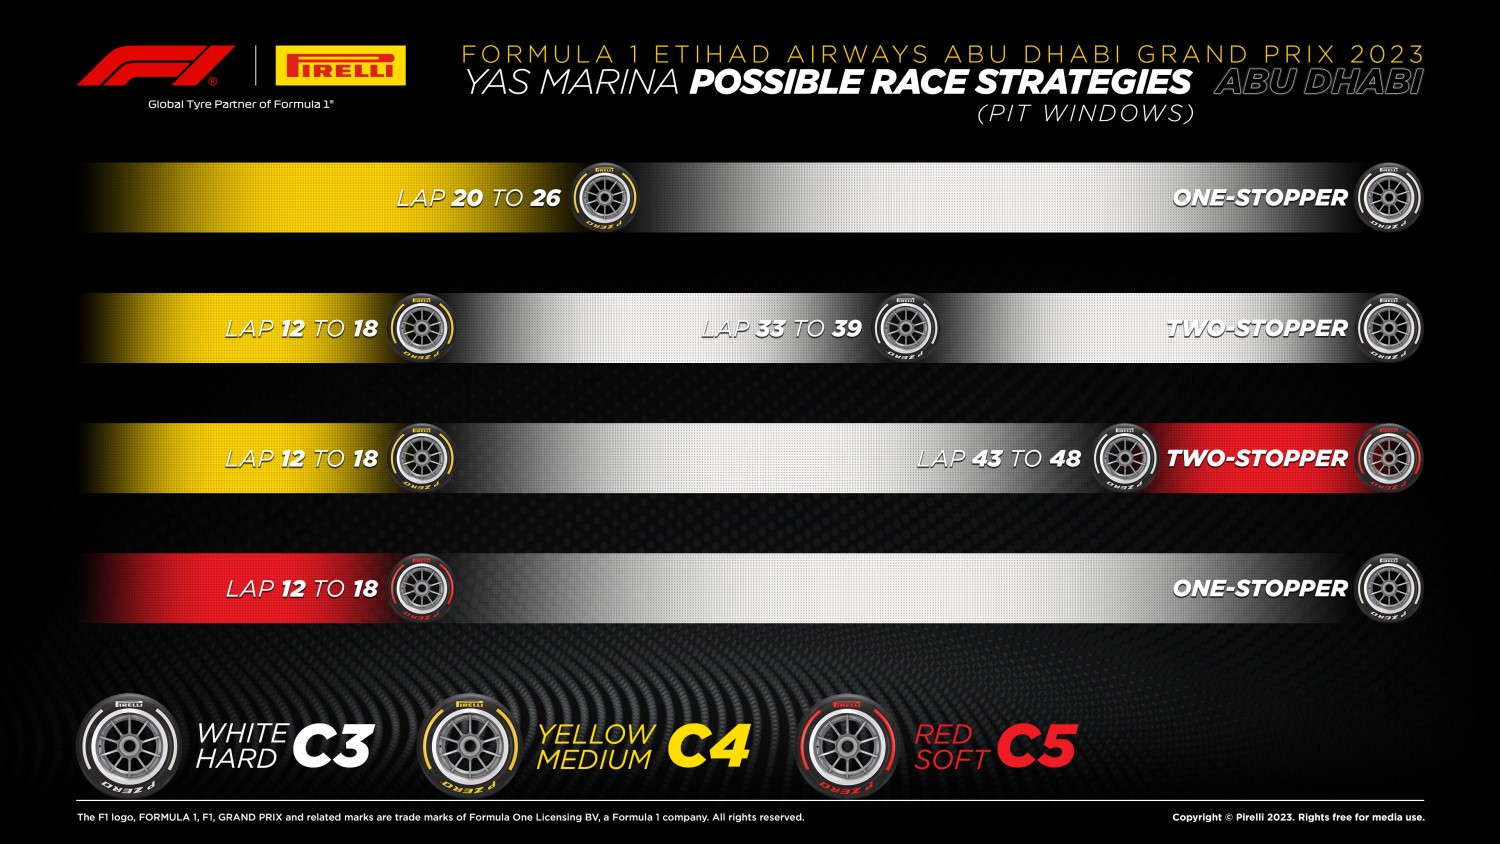 Possible Tire Strategies for 2023 Abu Dhabi GP